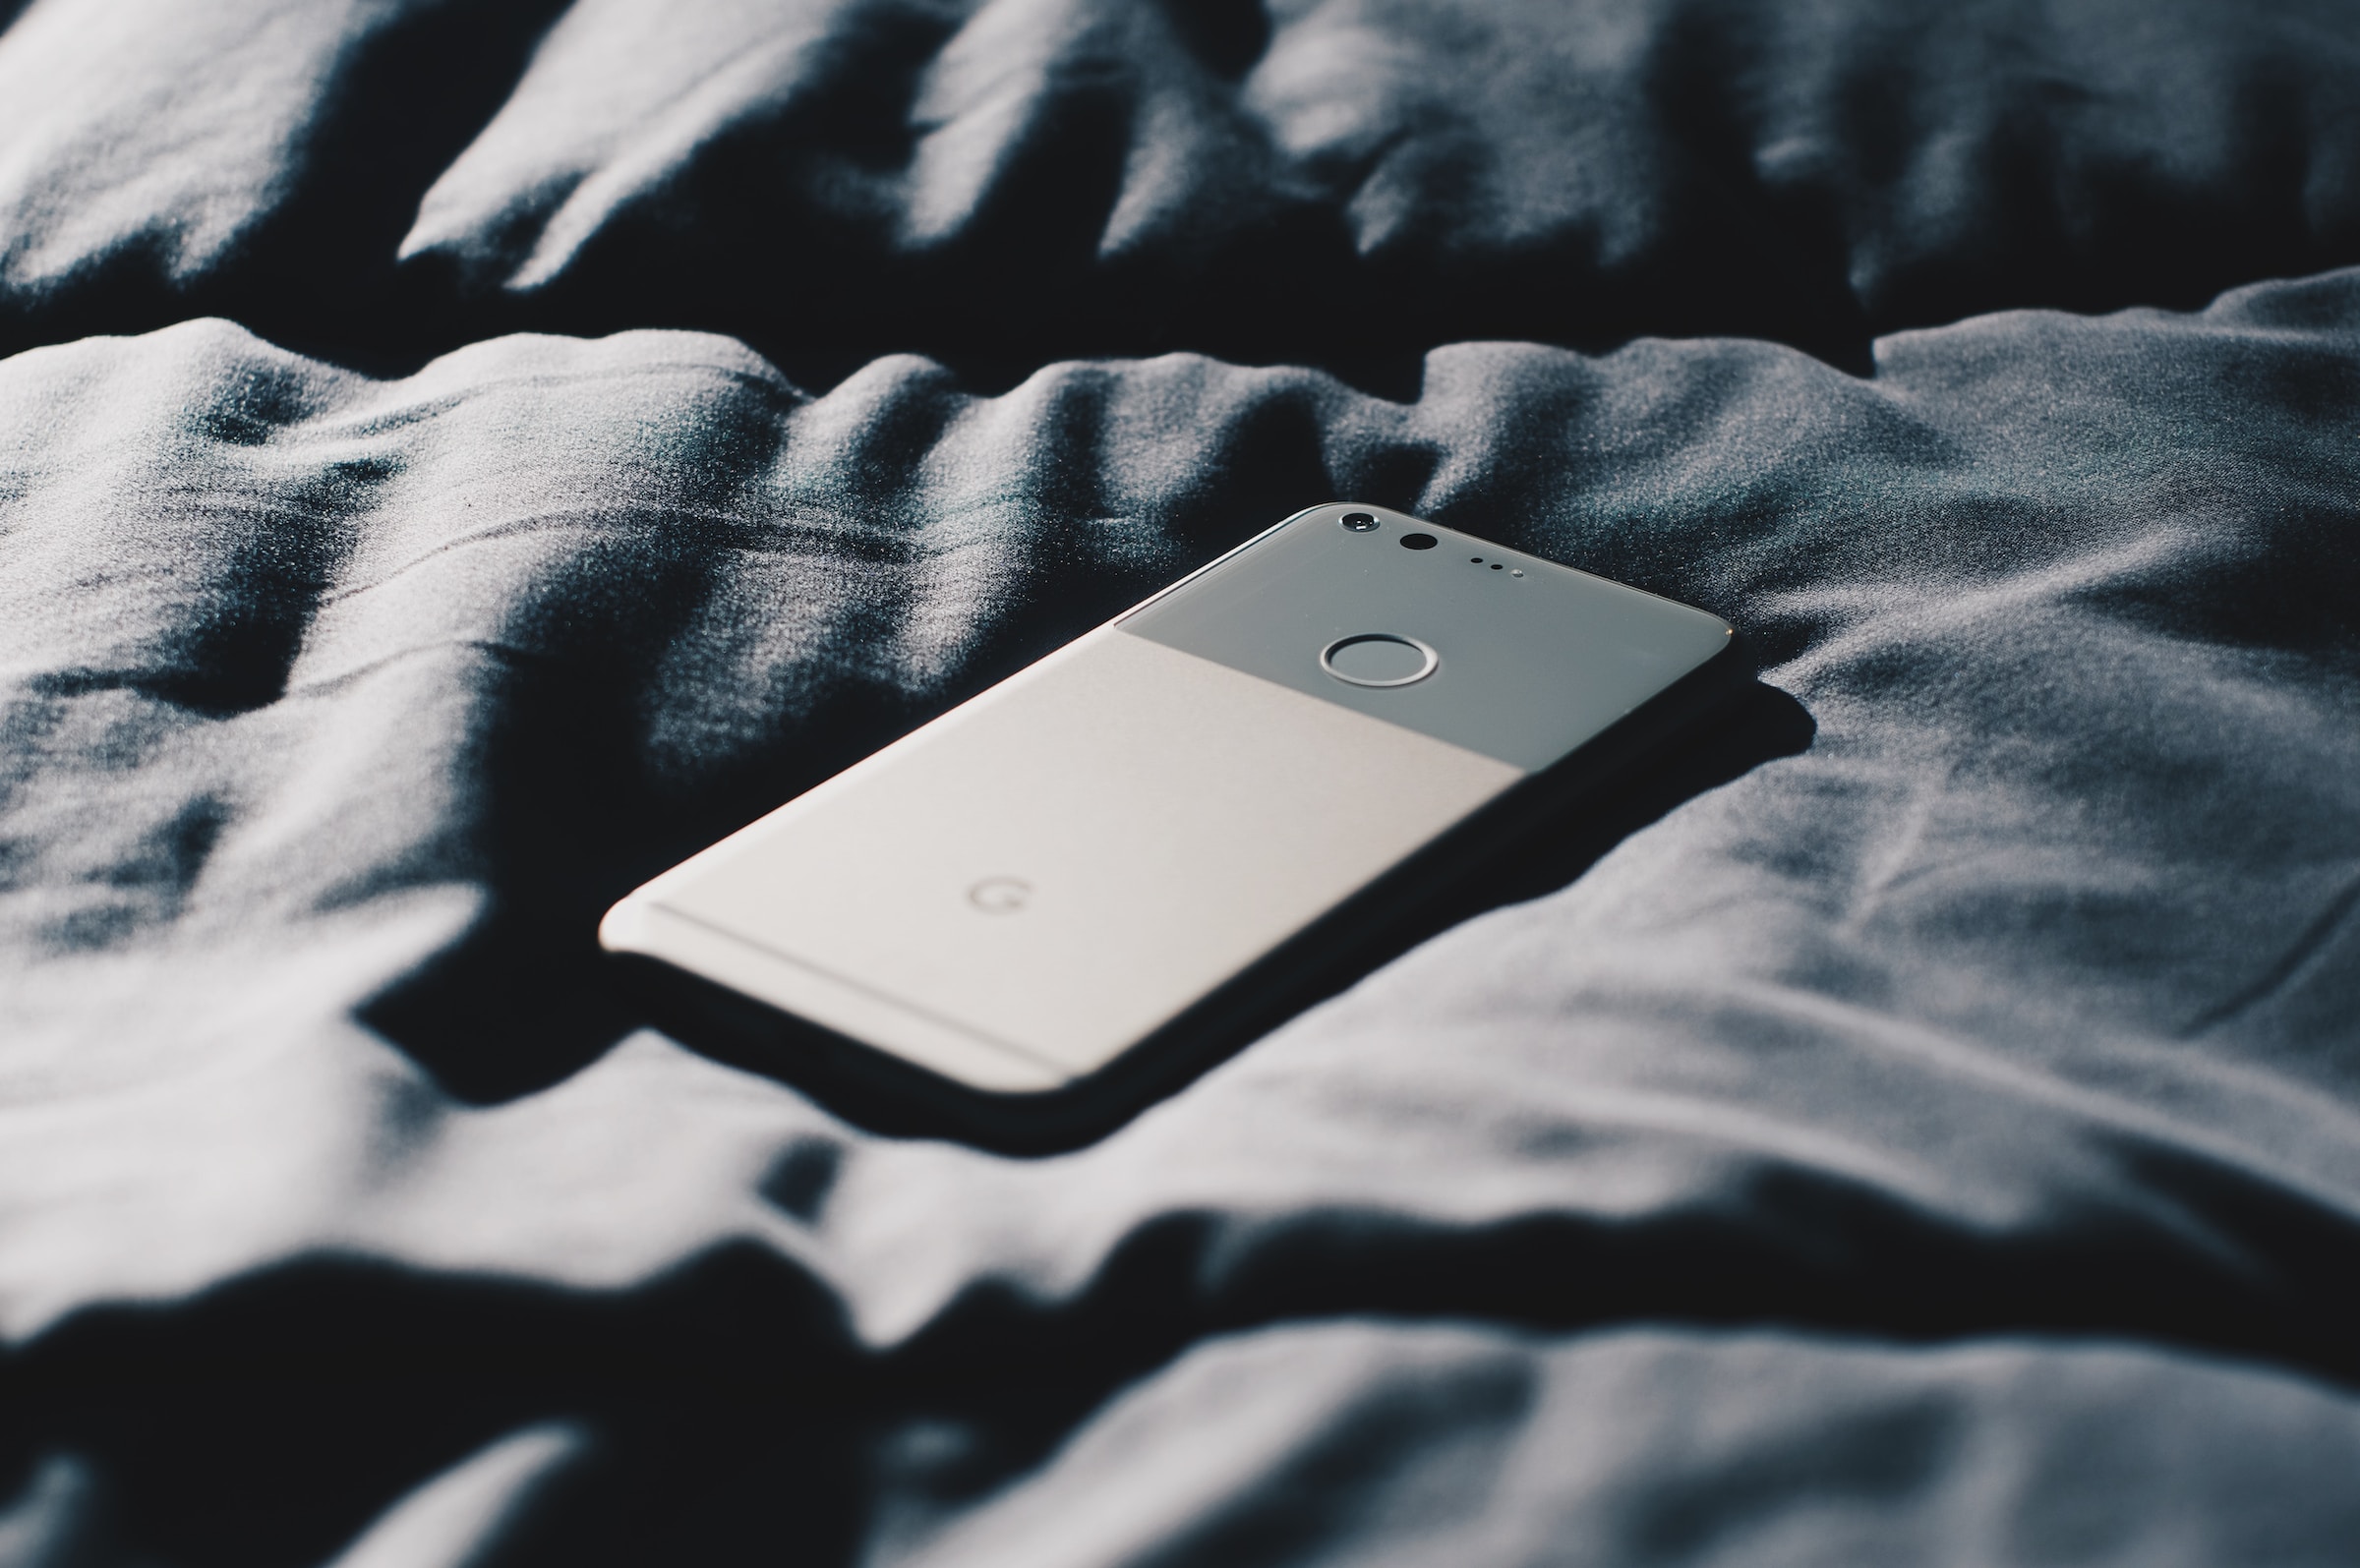 Telefon auf dem Bett | Quelle: Pexels